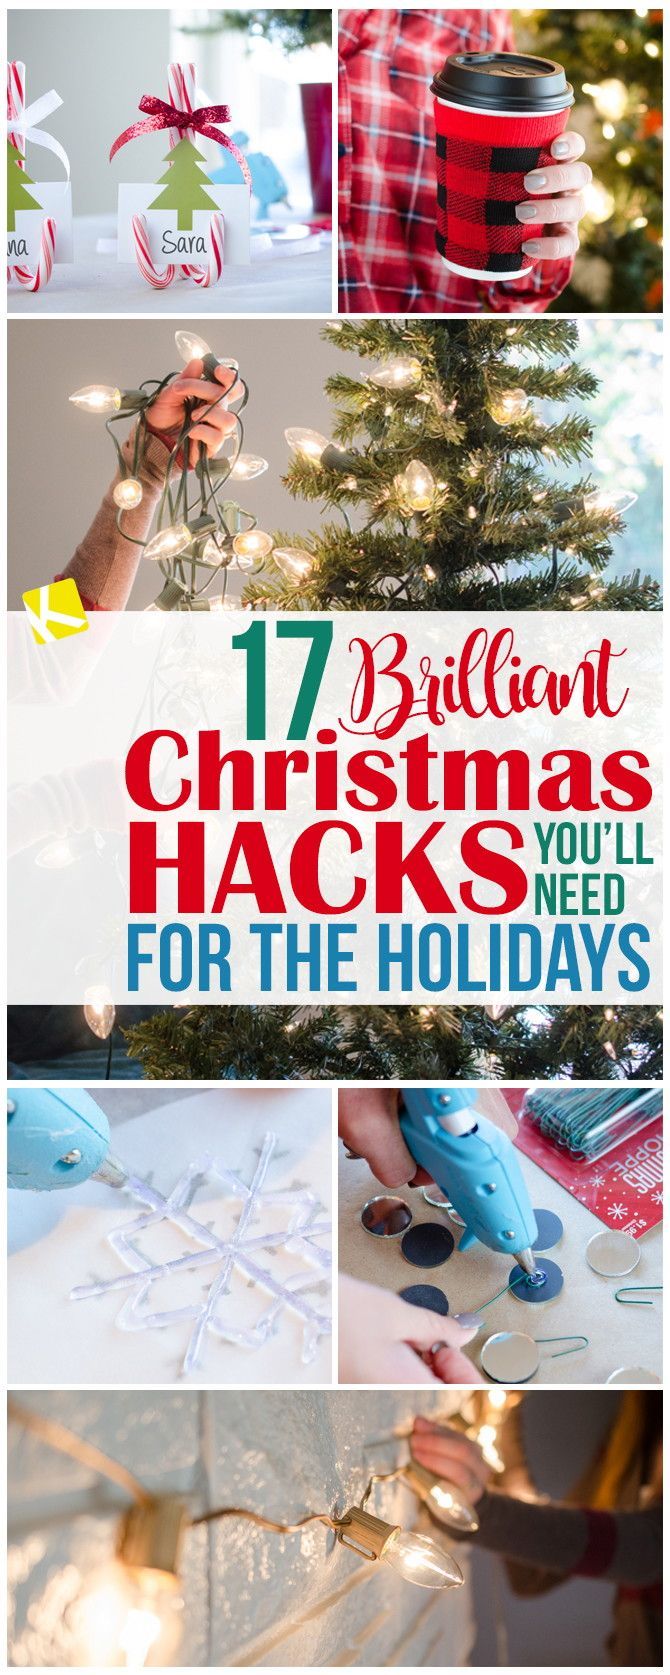 17 Brilliant Christmas Hacks You'll Need for the Holidays -   15 holiday Hacks good ideas